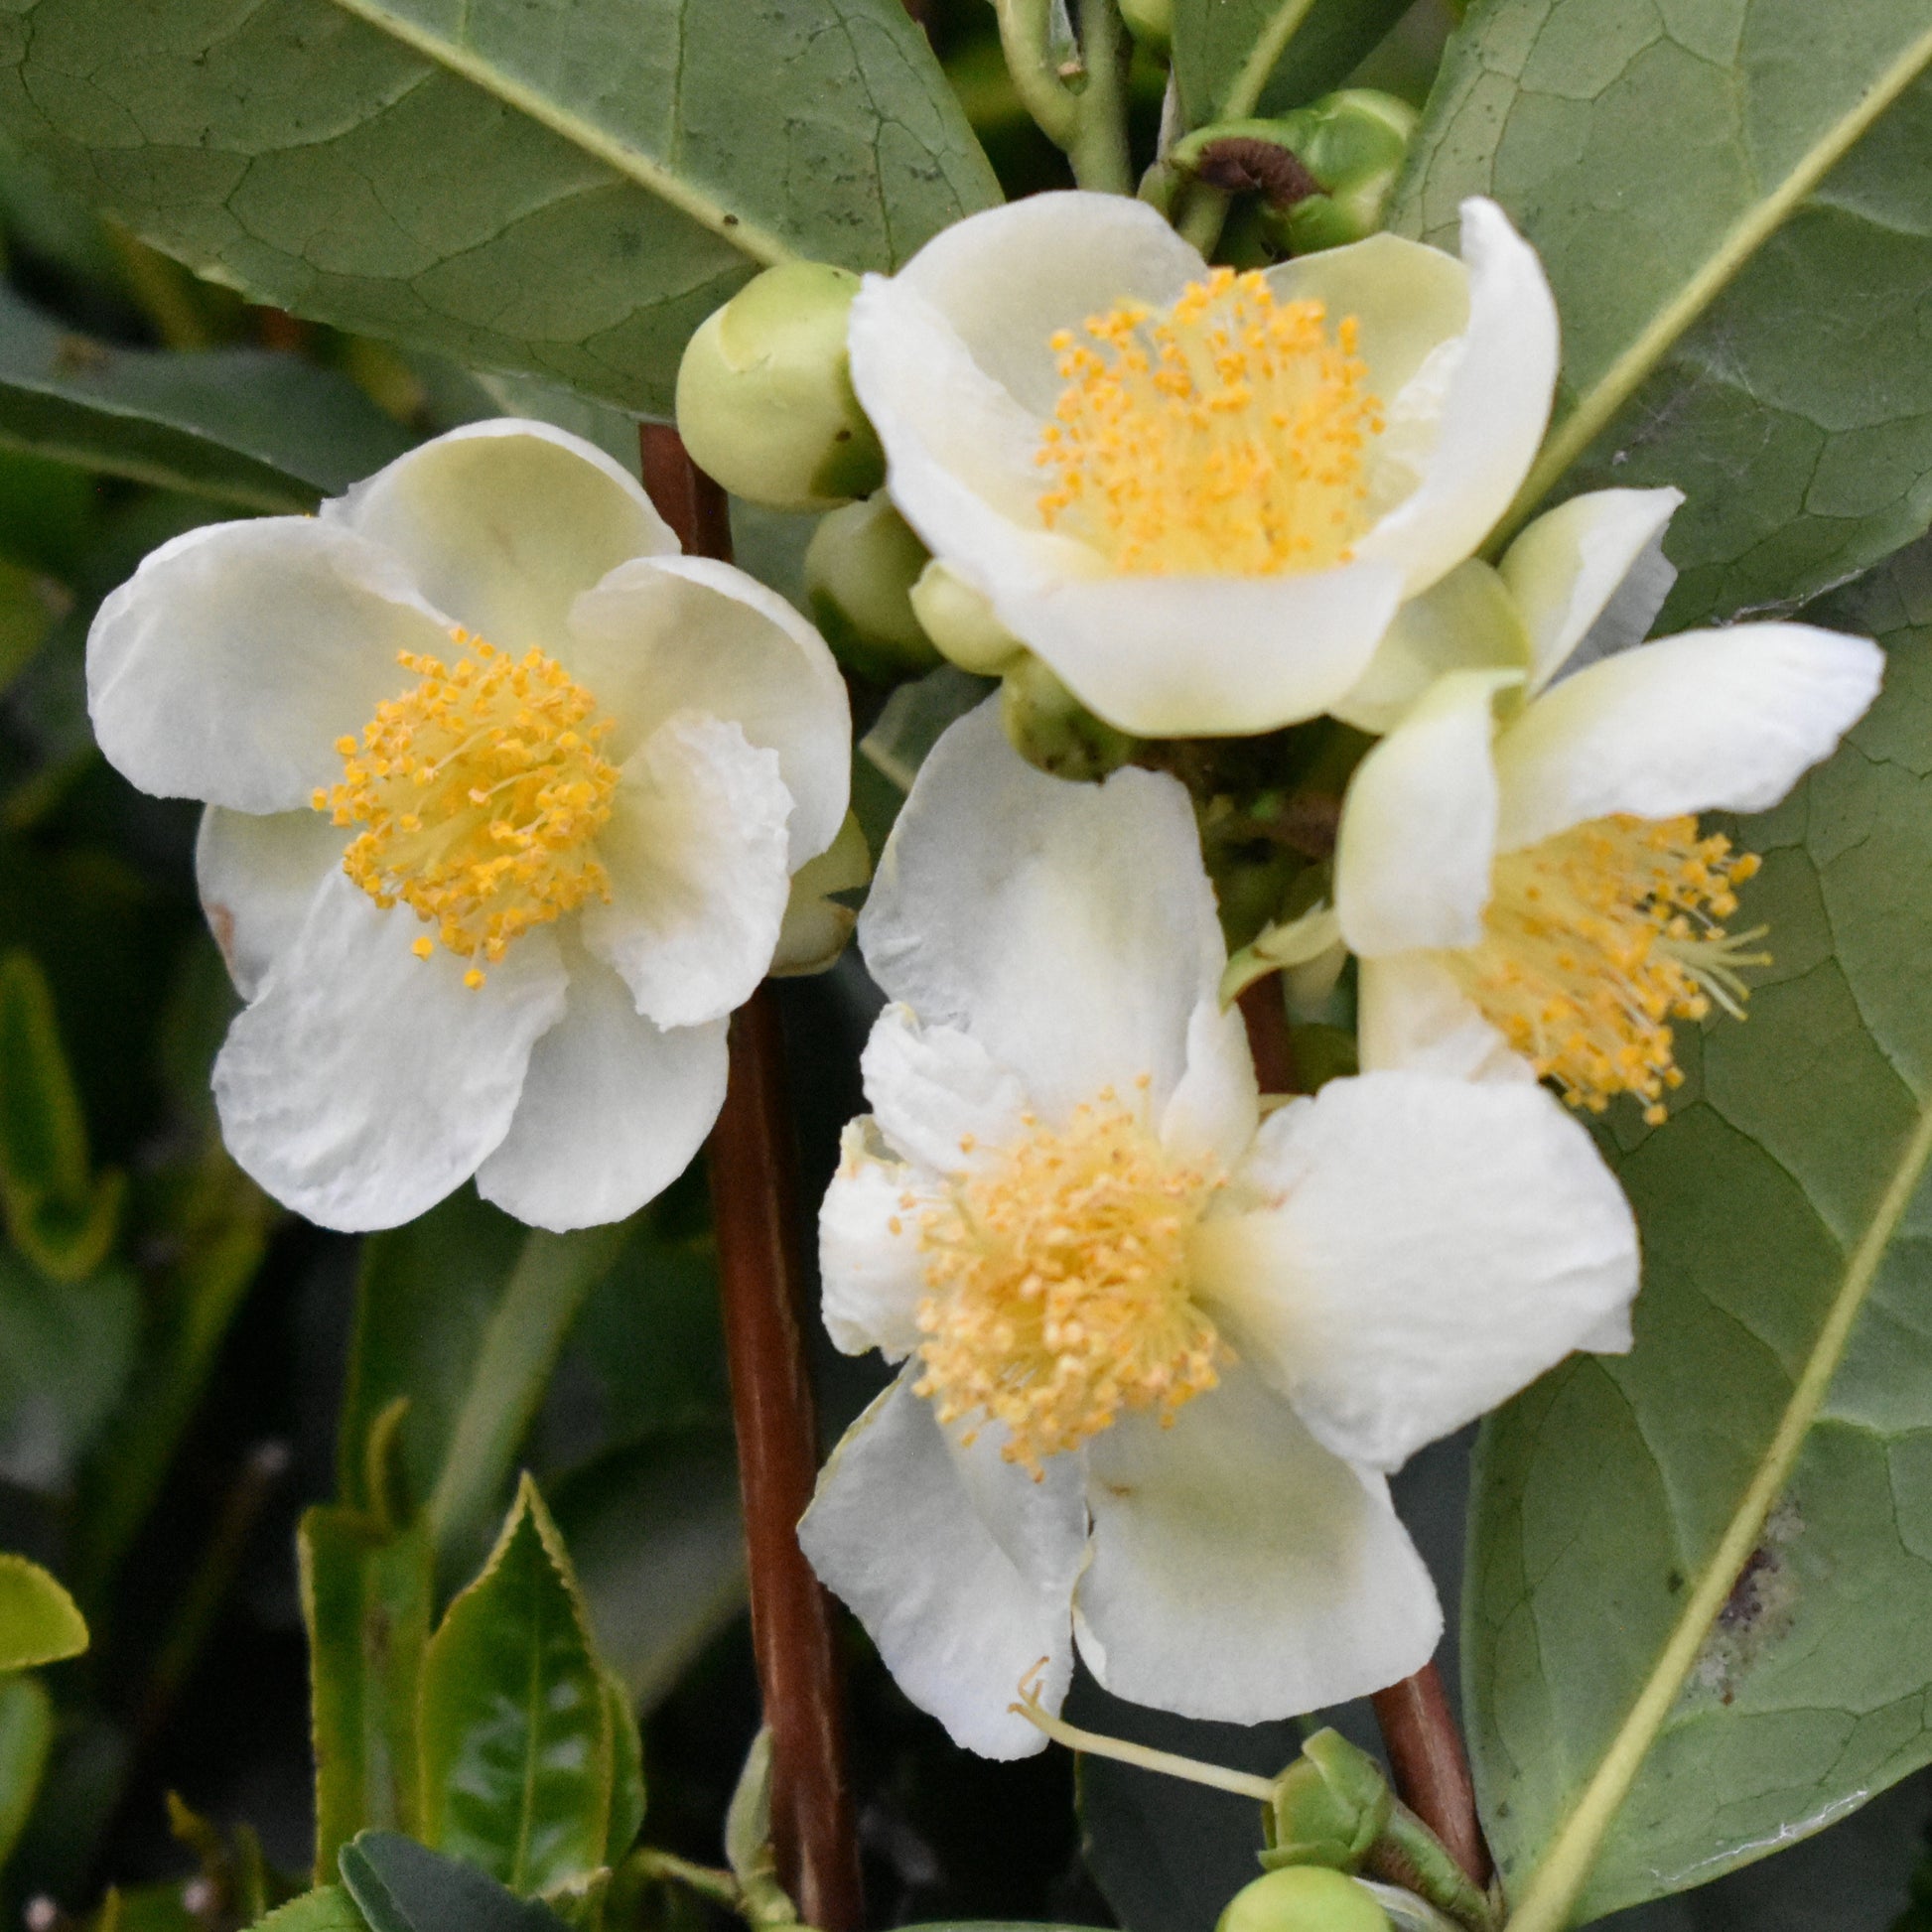 Theeplant - Camellia sinensis